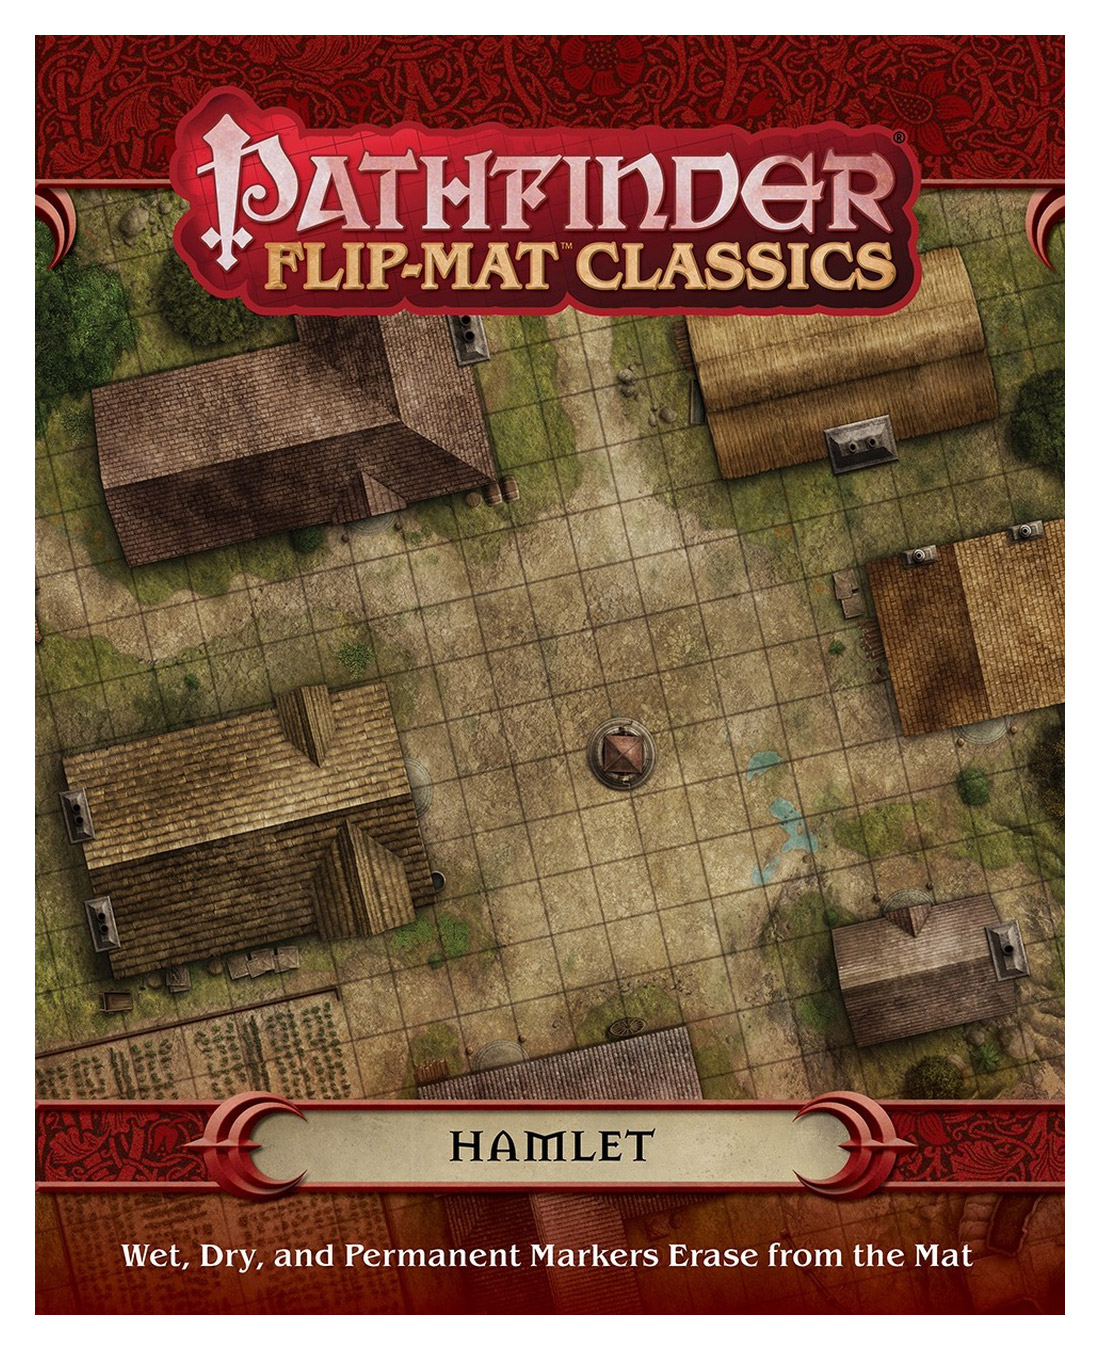 Hamlet Pathfinder Flip-mat Classics Paizo Pzo31026 for sale online